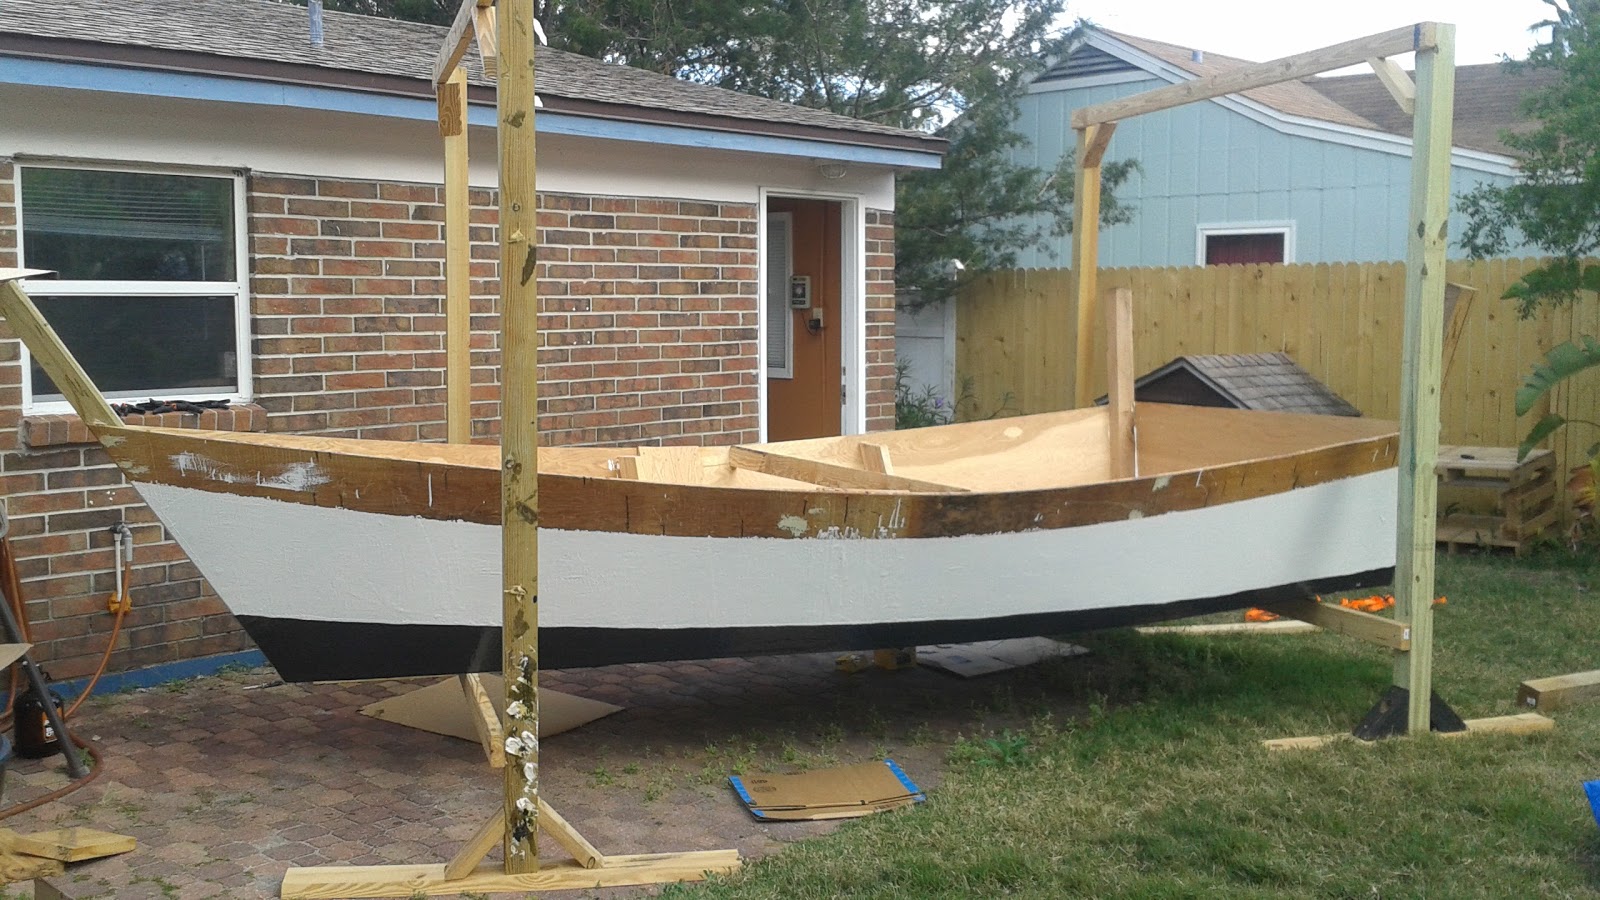 jose's diy ideas : walter baron's 16' lumber yard skiff